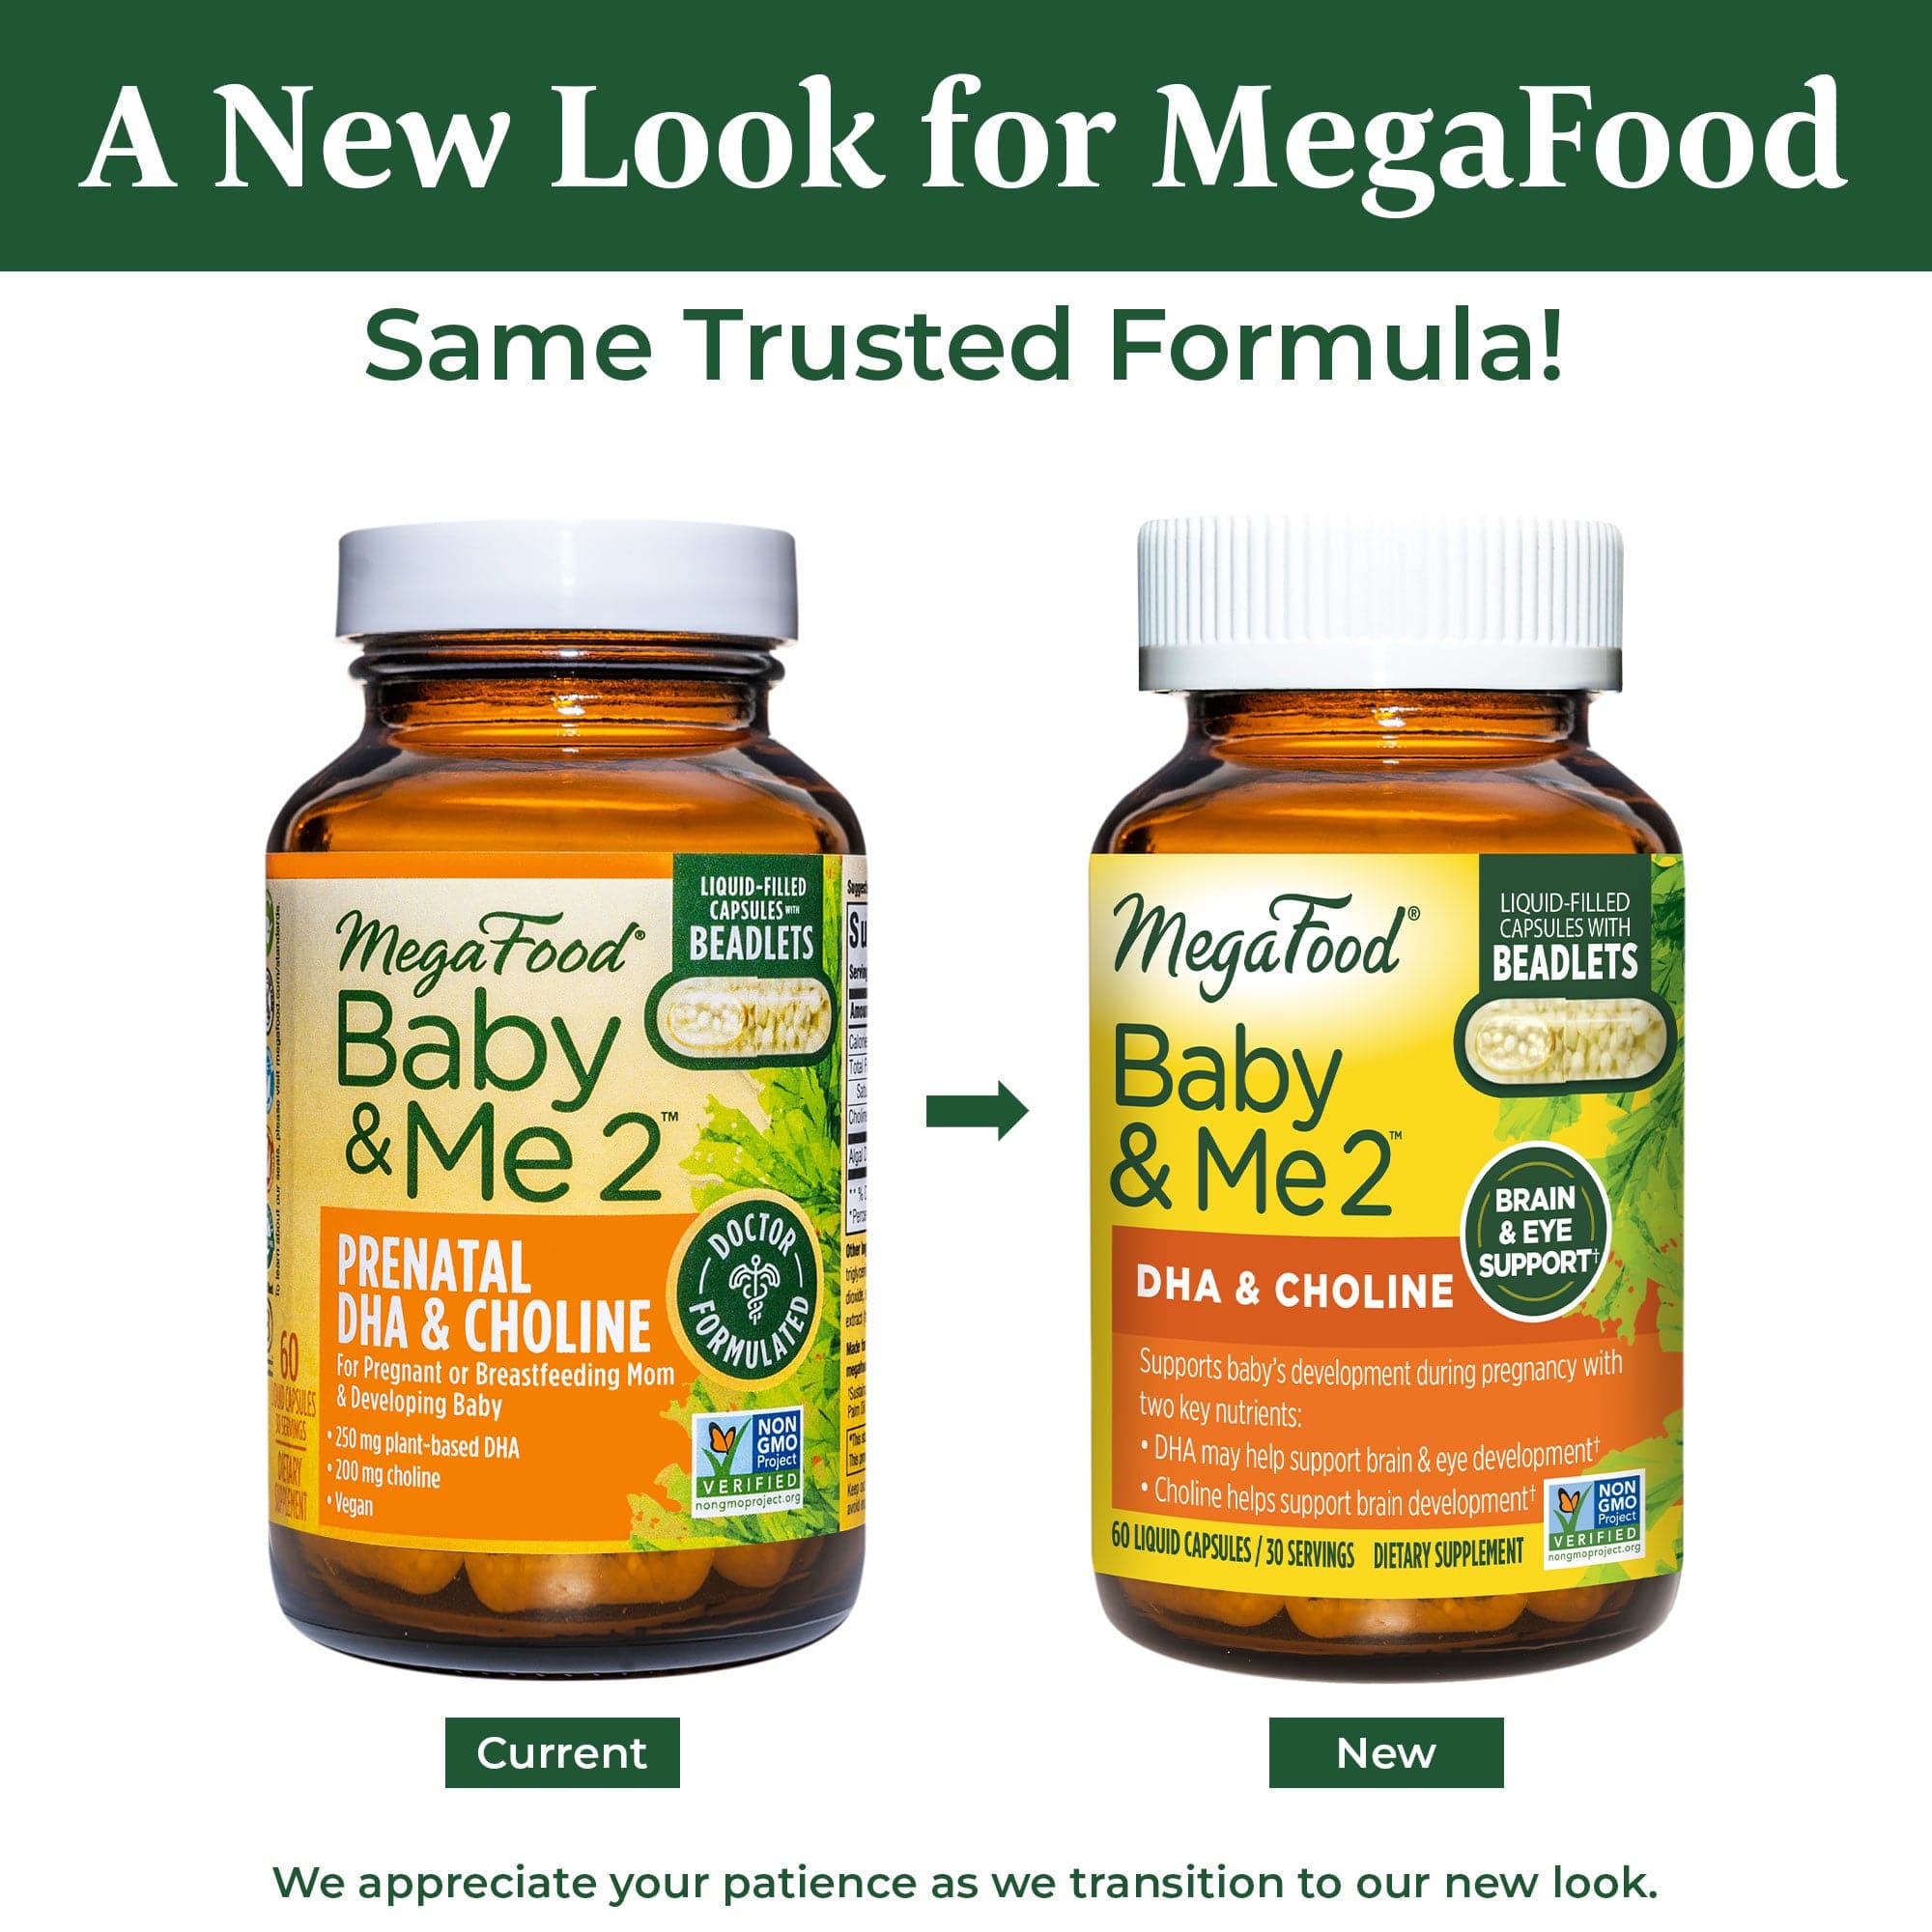 MegaFood Baby & Me 2 Prenatal DHA & Choline